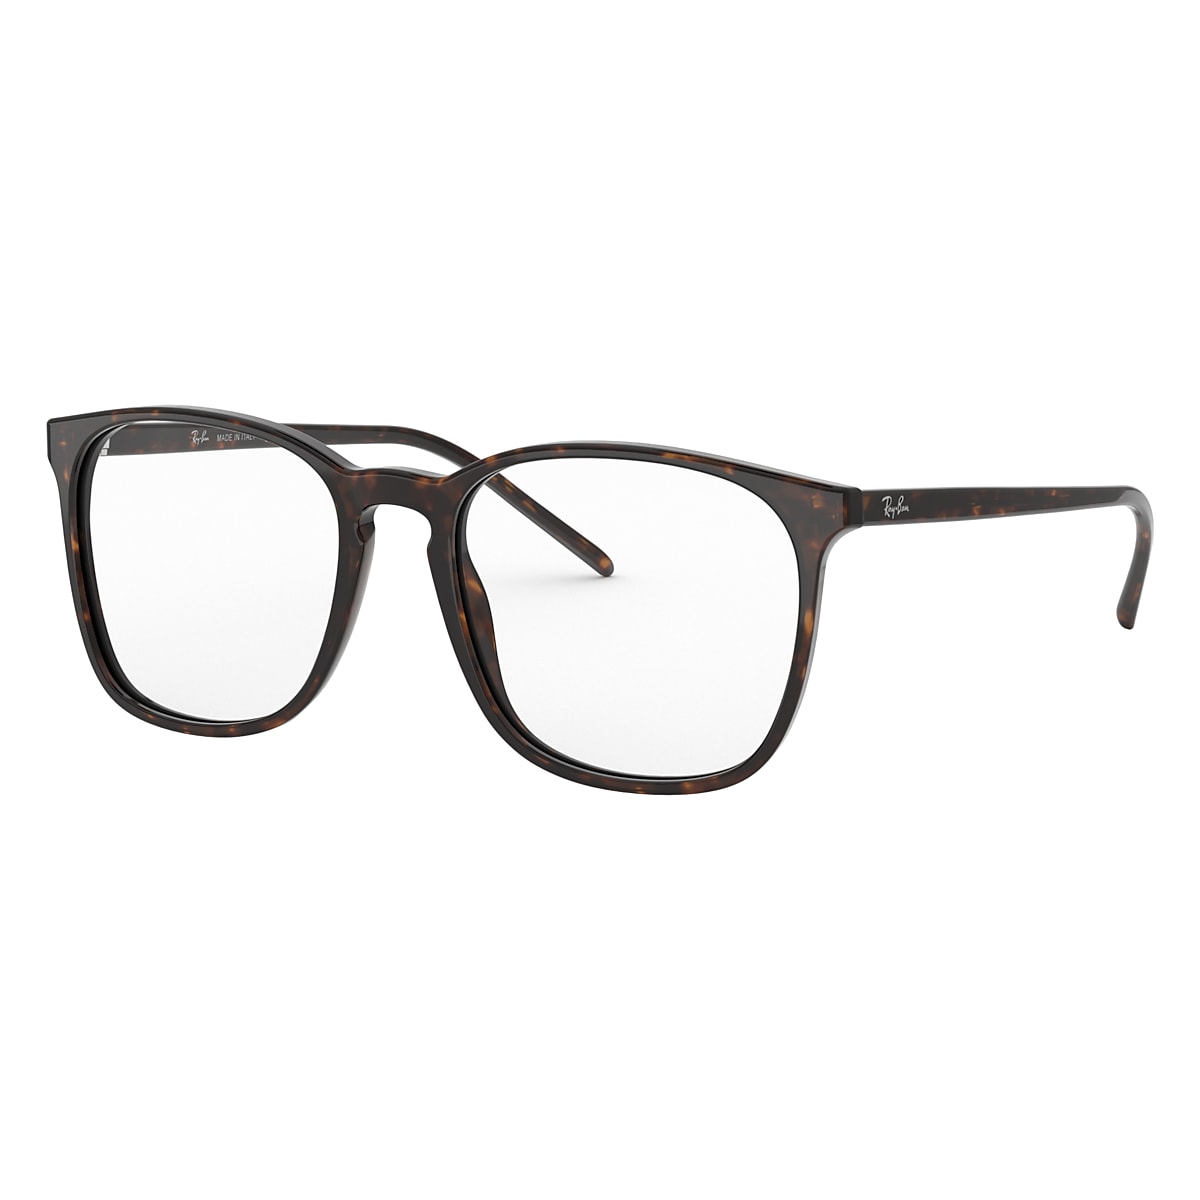 RB5387 OPTICS Eyeglasses with Havana Frame - RB5387 - Ray-Ban